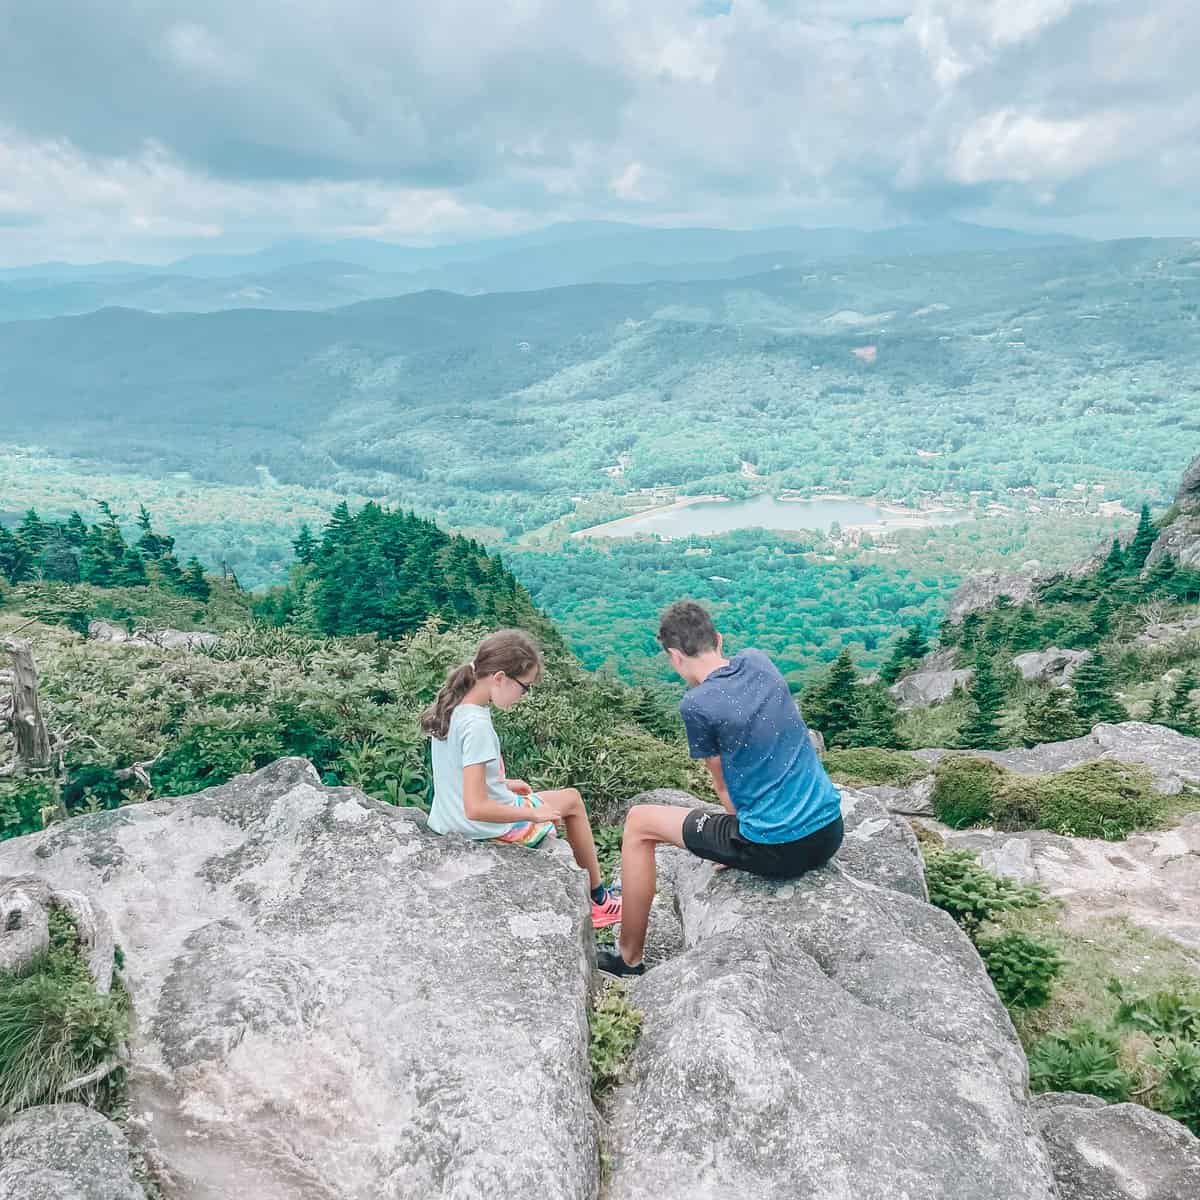 Two children sitting on rocks